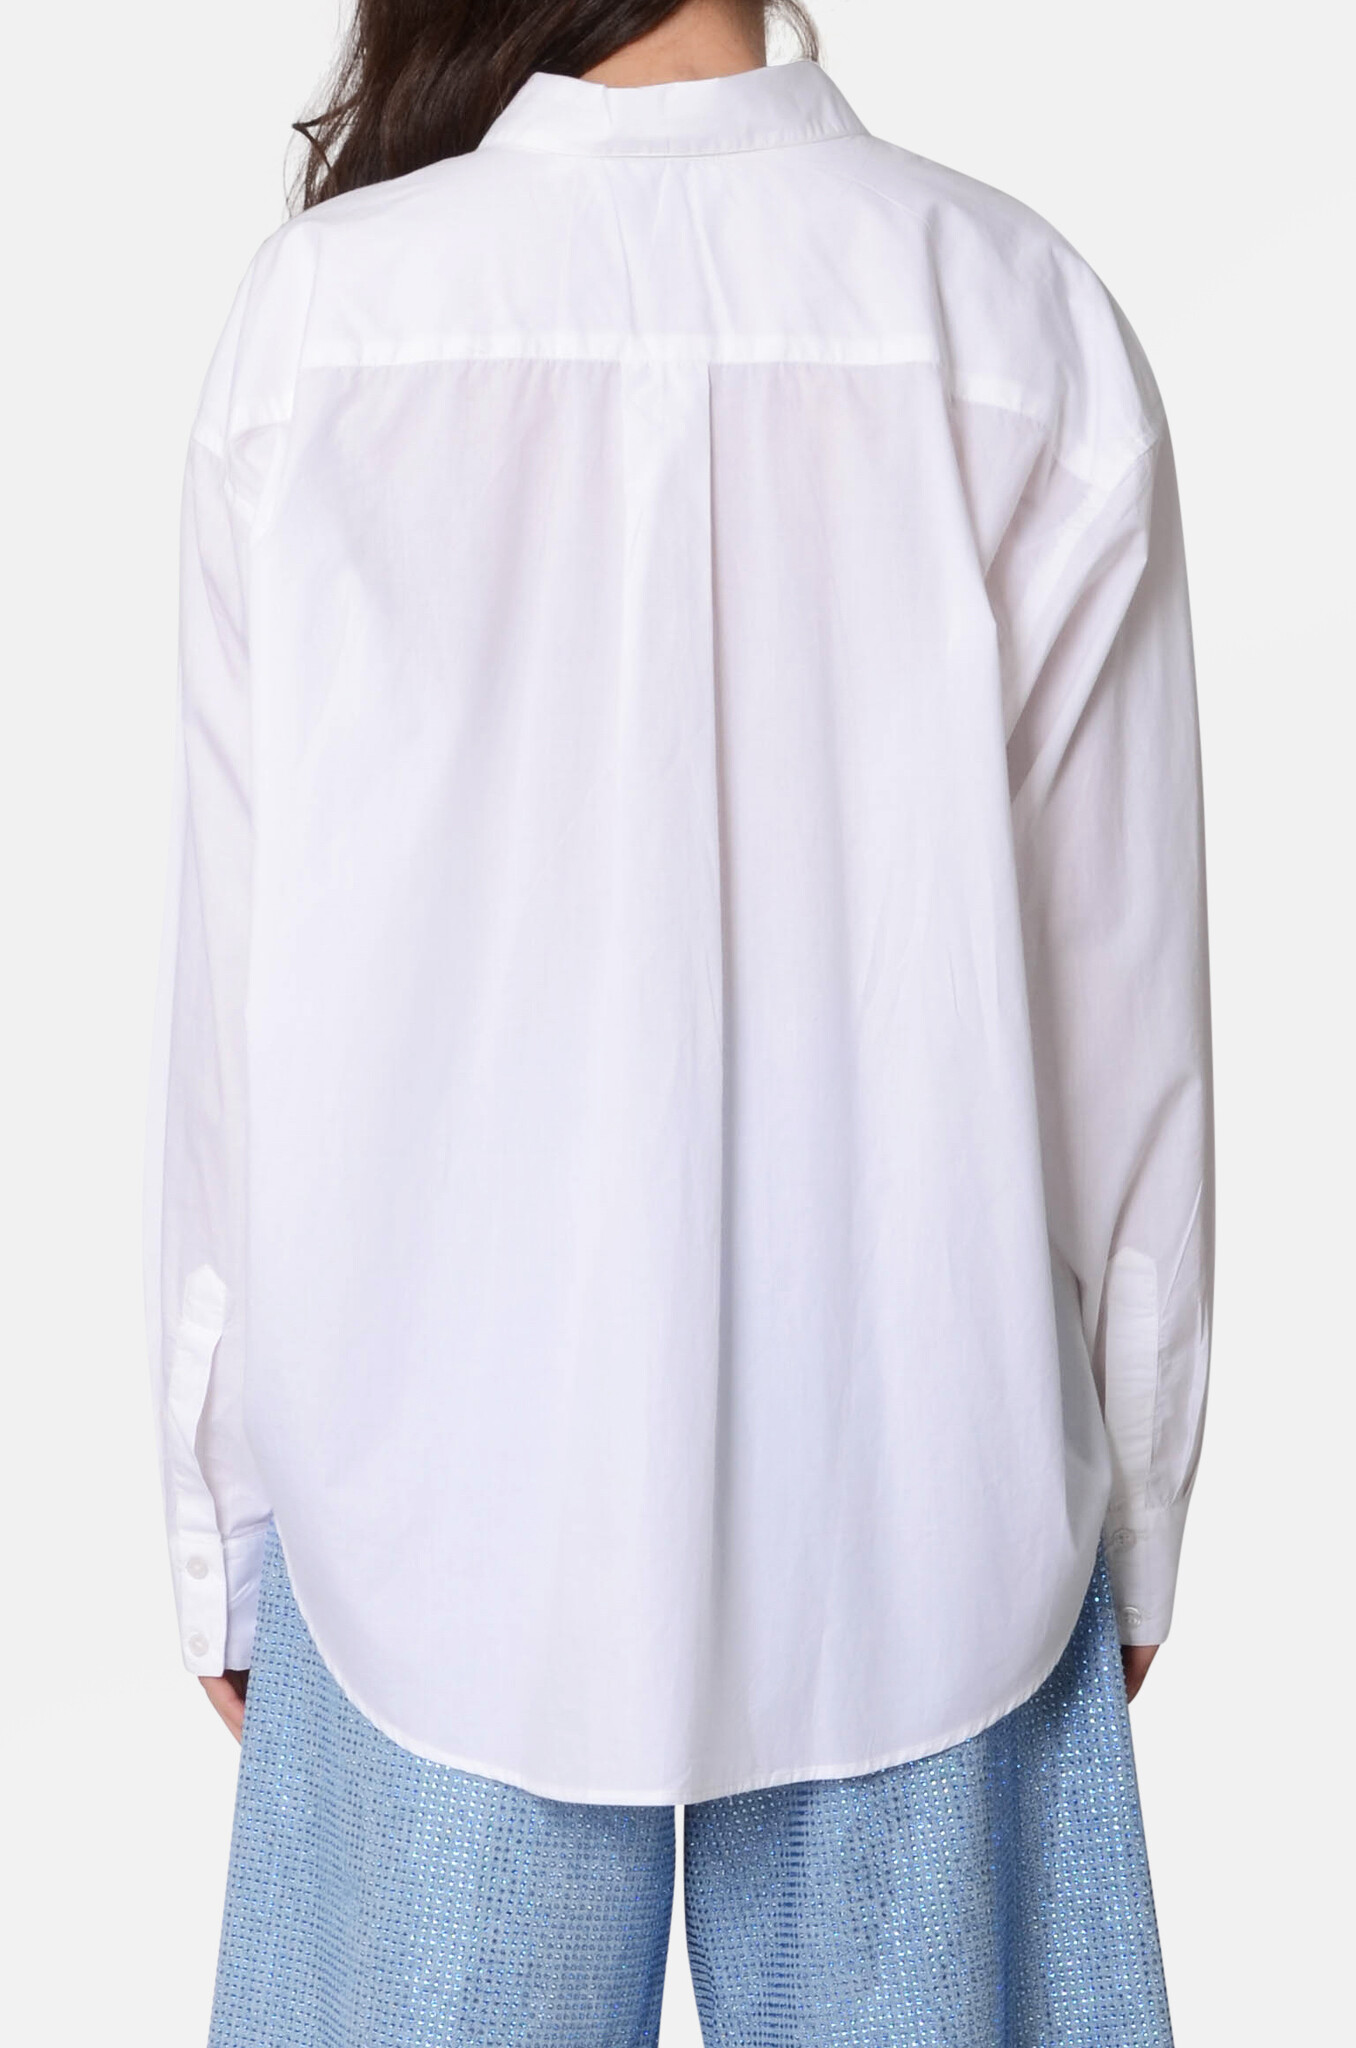 Diaz Shirt in White-4